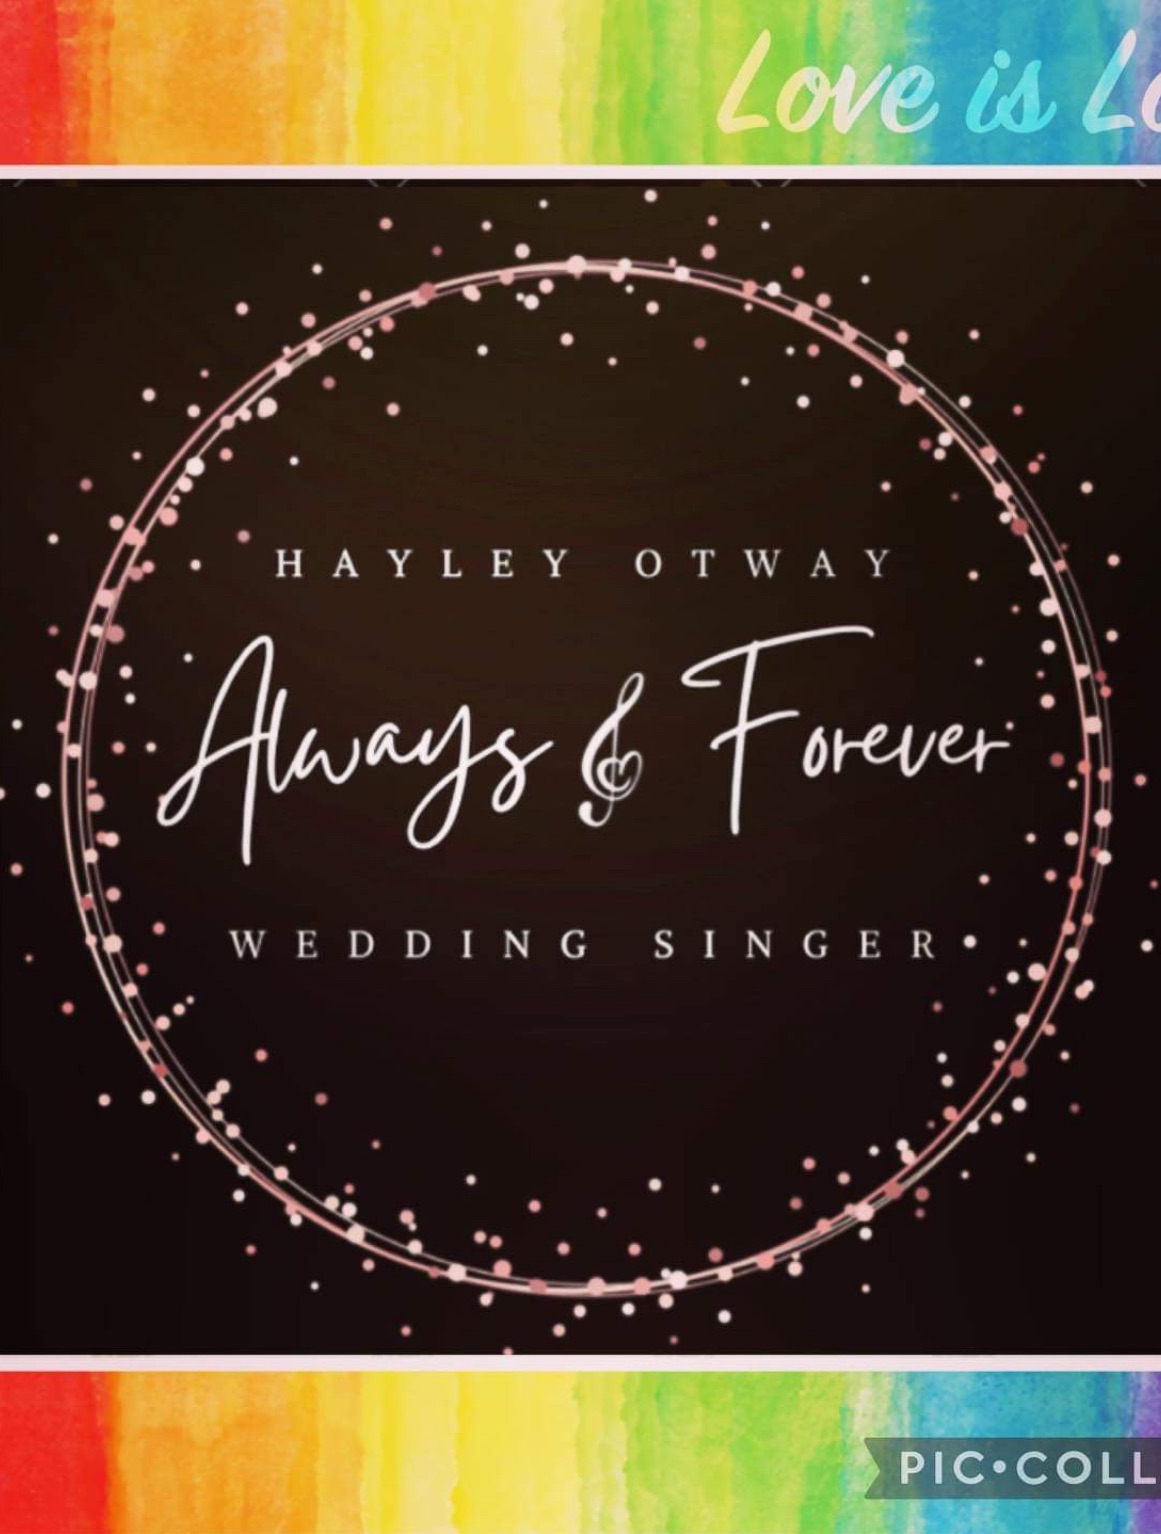 Hayley Otway - Always & Forever Wedding Singer-Image-13